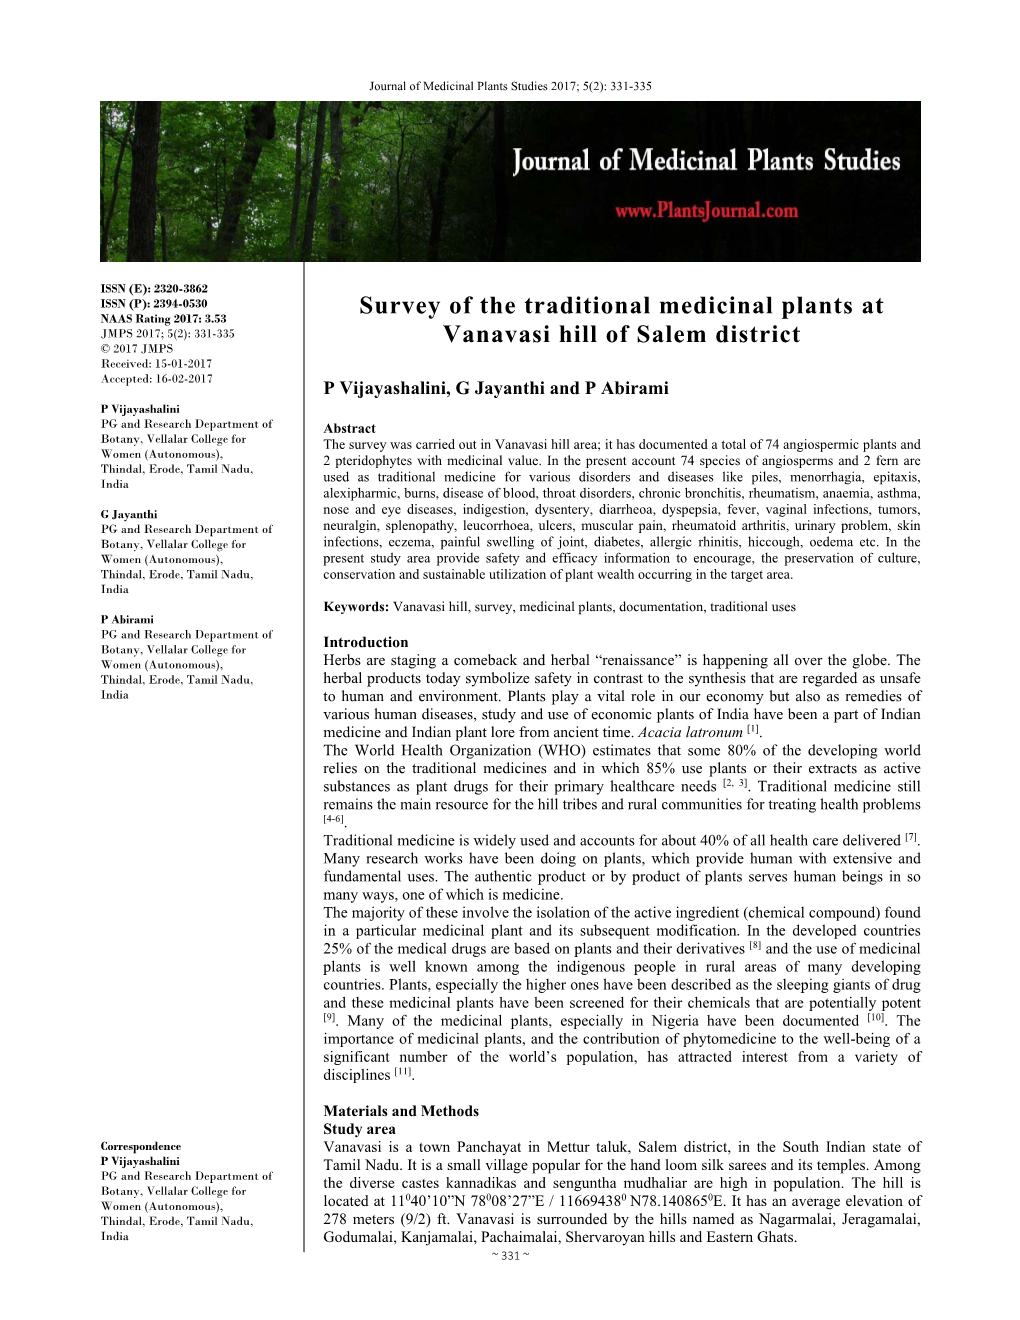 Survey of the Traditional Medicinal Plants at Vanavasi Hill of Salem